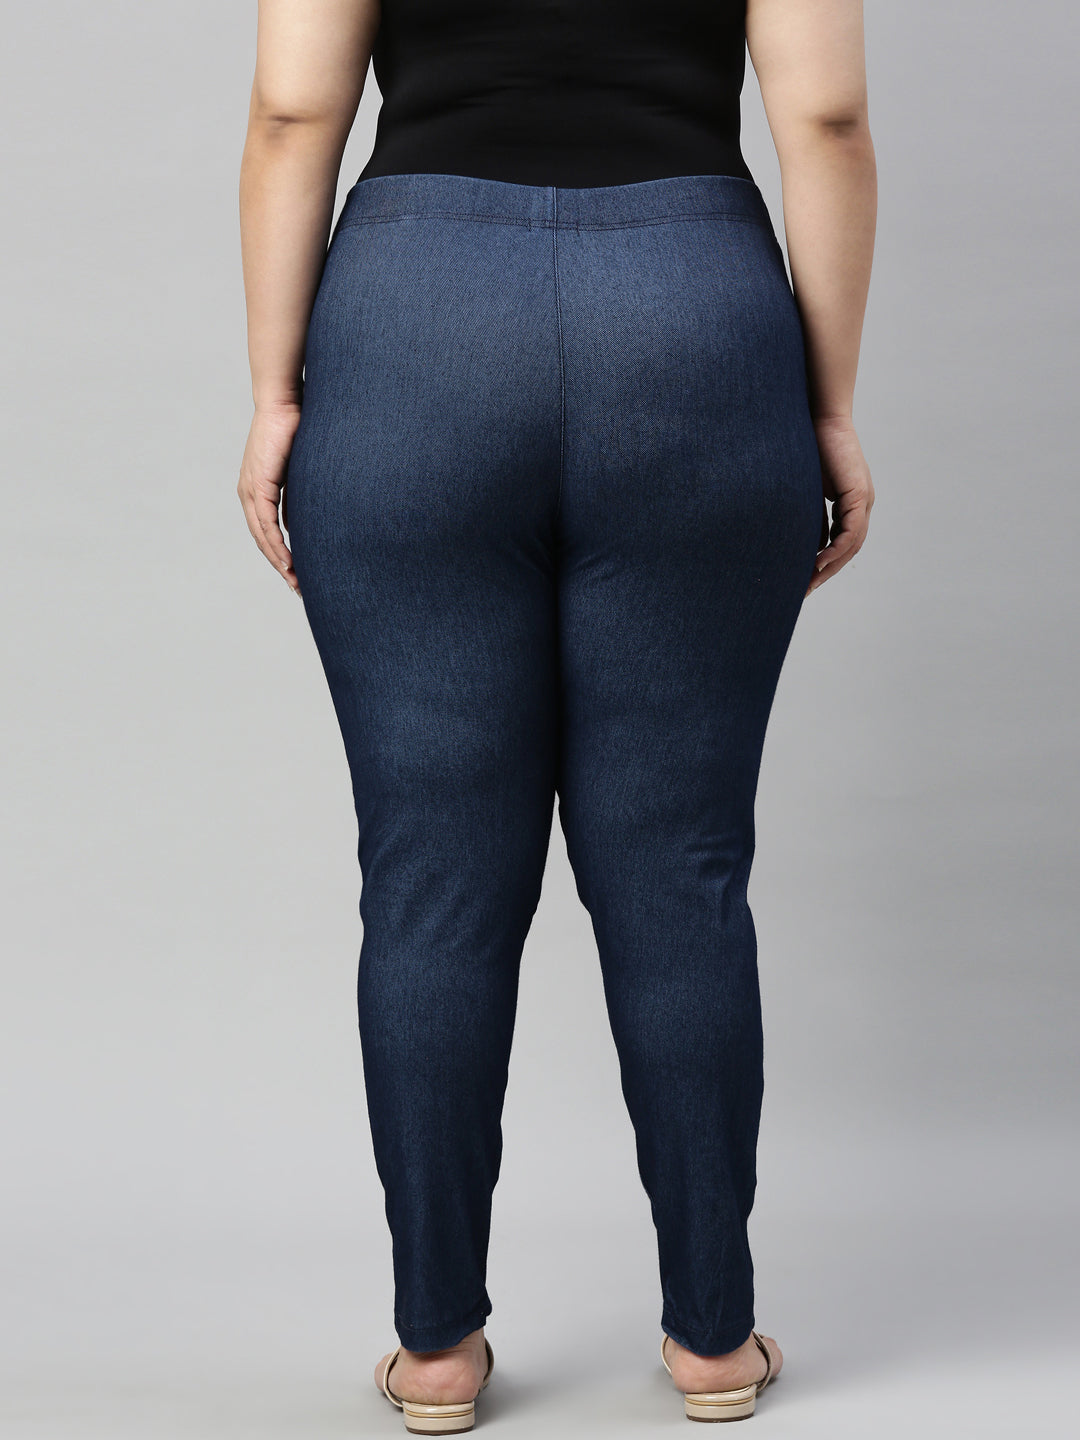 Women's Denim Print Fake Jeans Look Like Leggings Sexy Stretchy High Waist  Slim Leggings That Hide Cellulite at Amazon Women's Clothing store